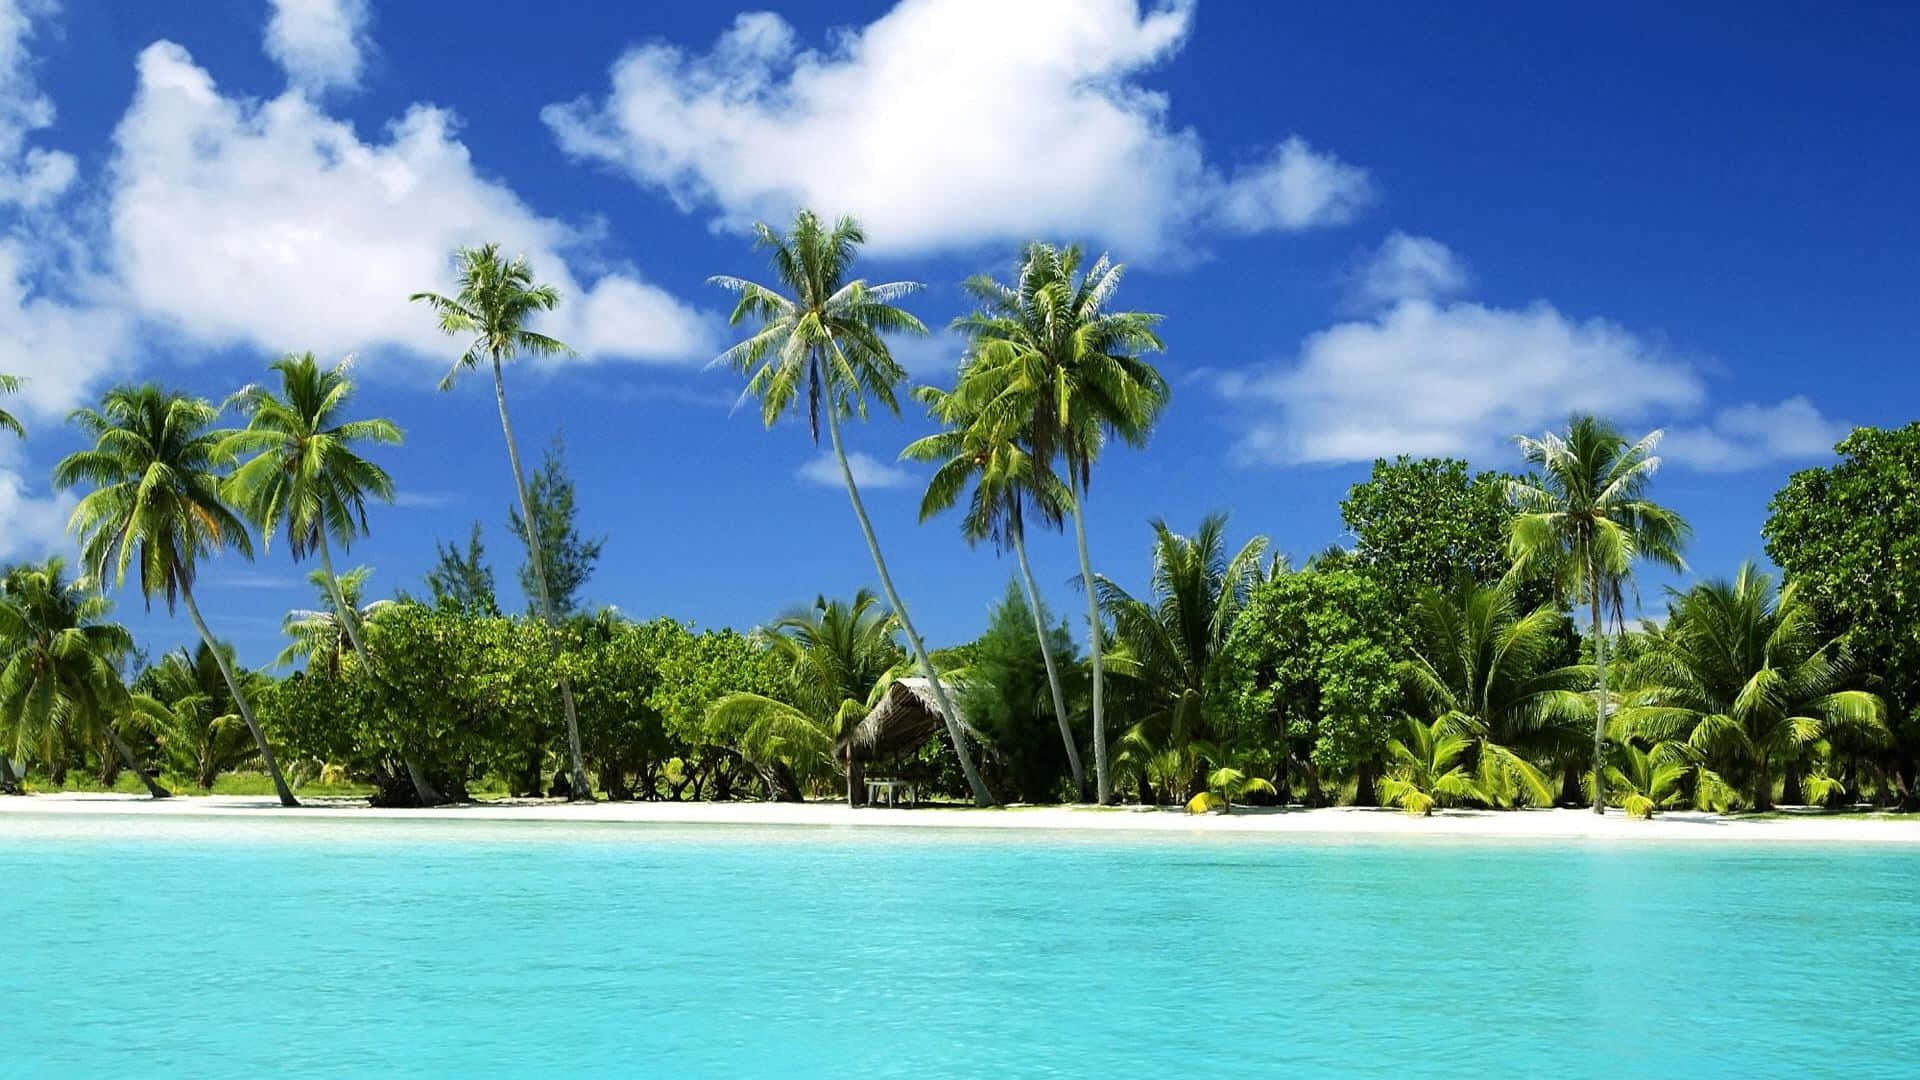 tropical paradise background